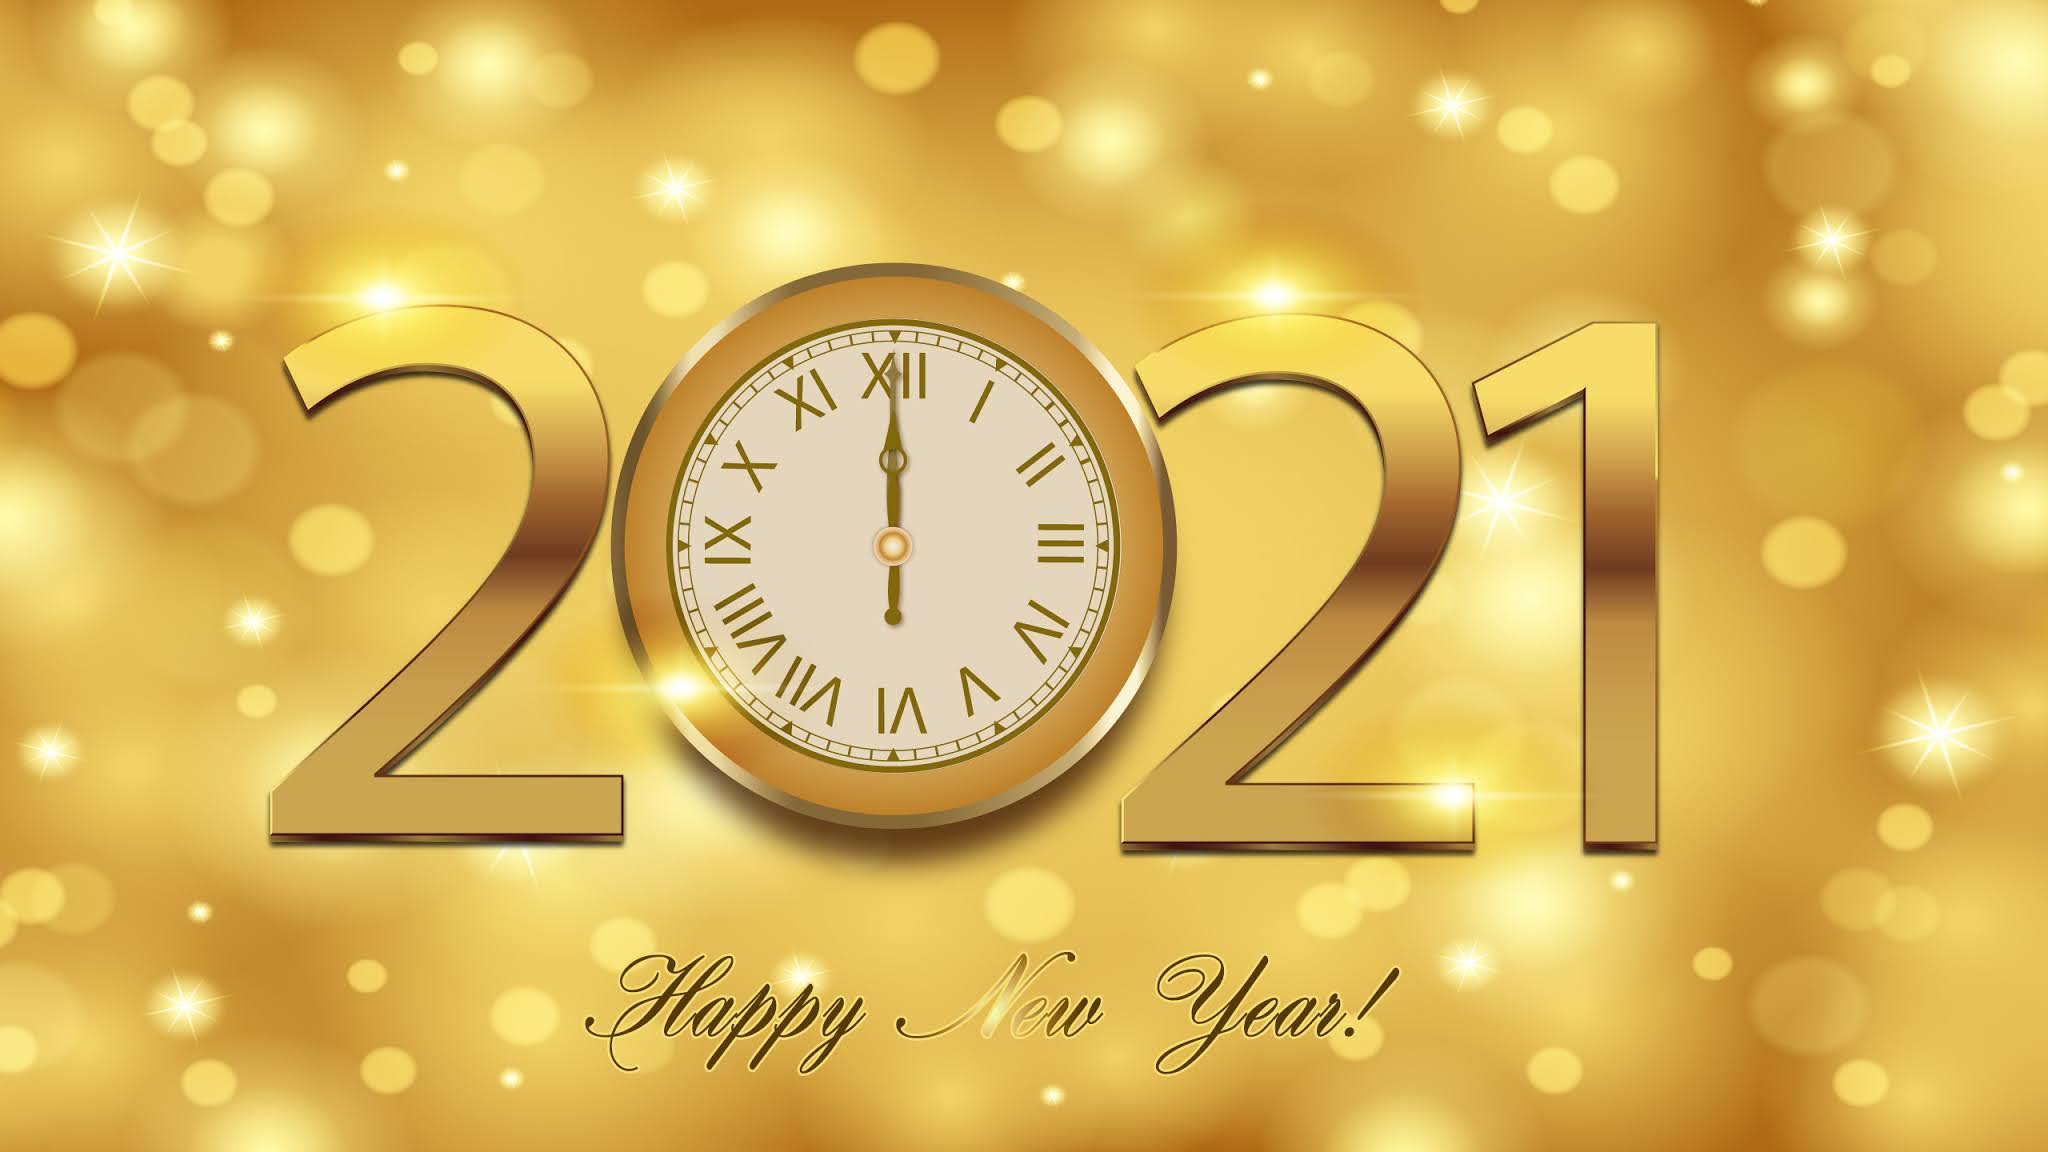 Happy New Year 2021 Golden Background